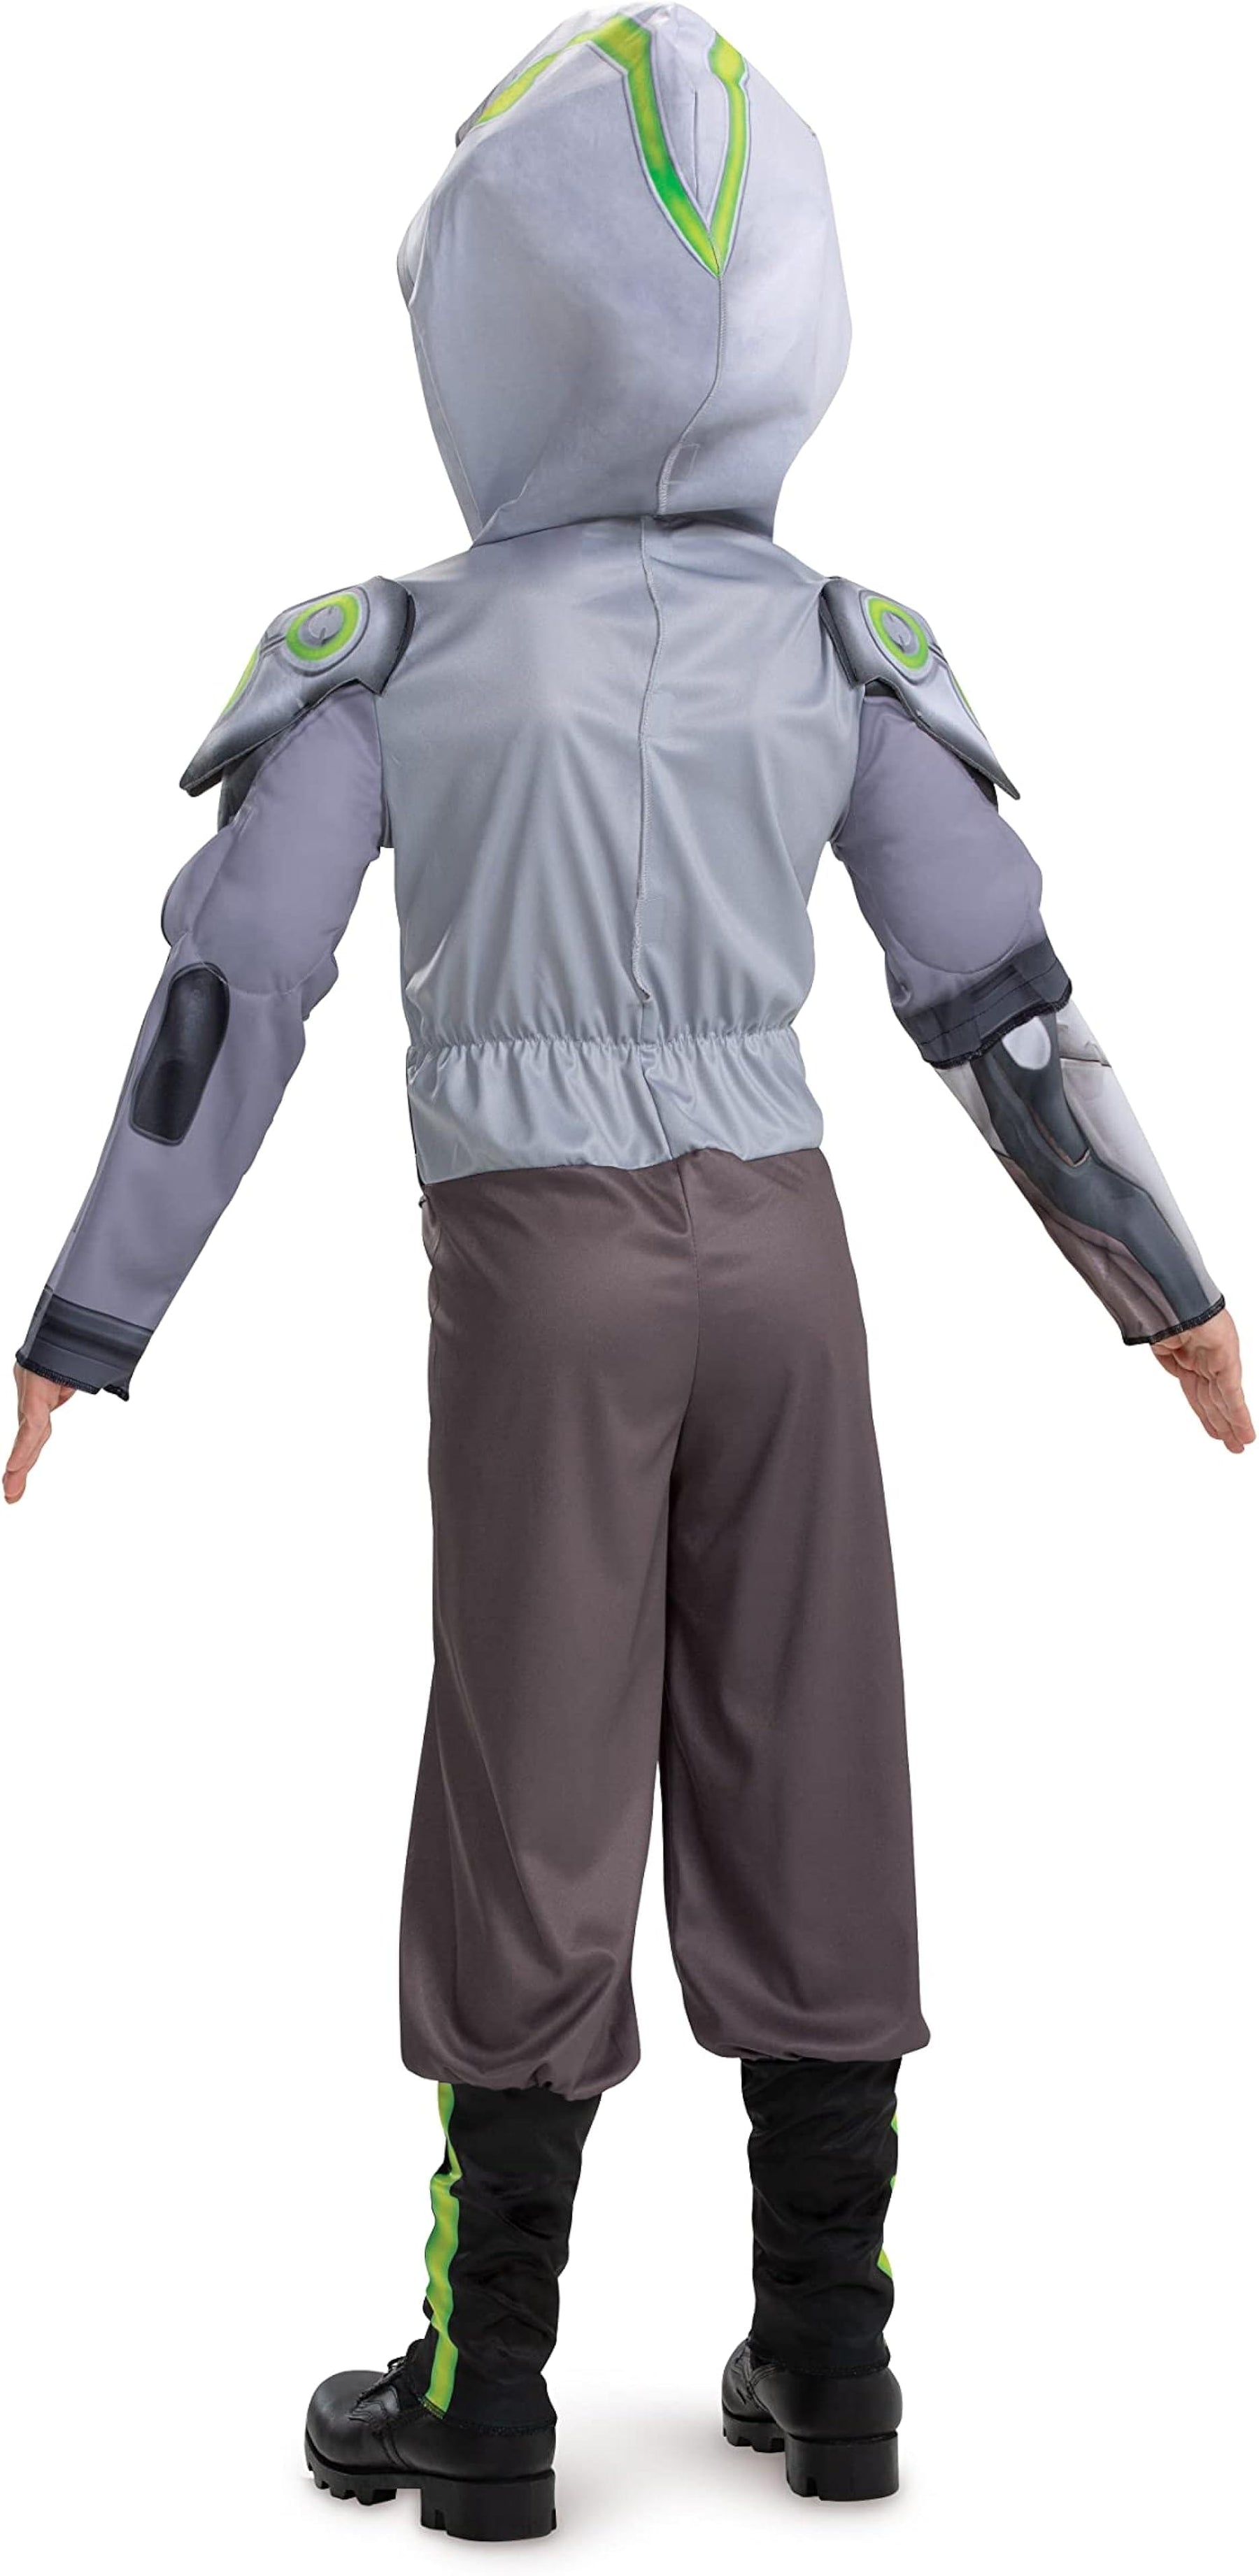 Overwatch Genji Deluxe Child Muscle Costume